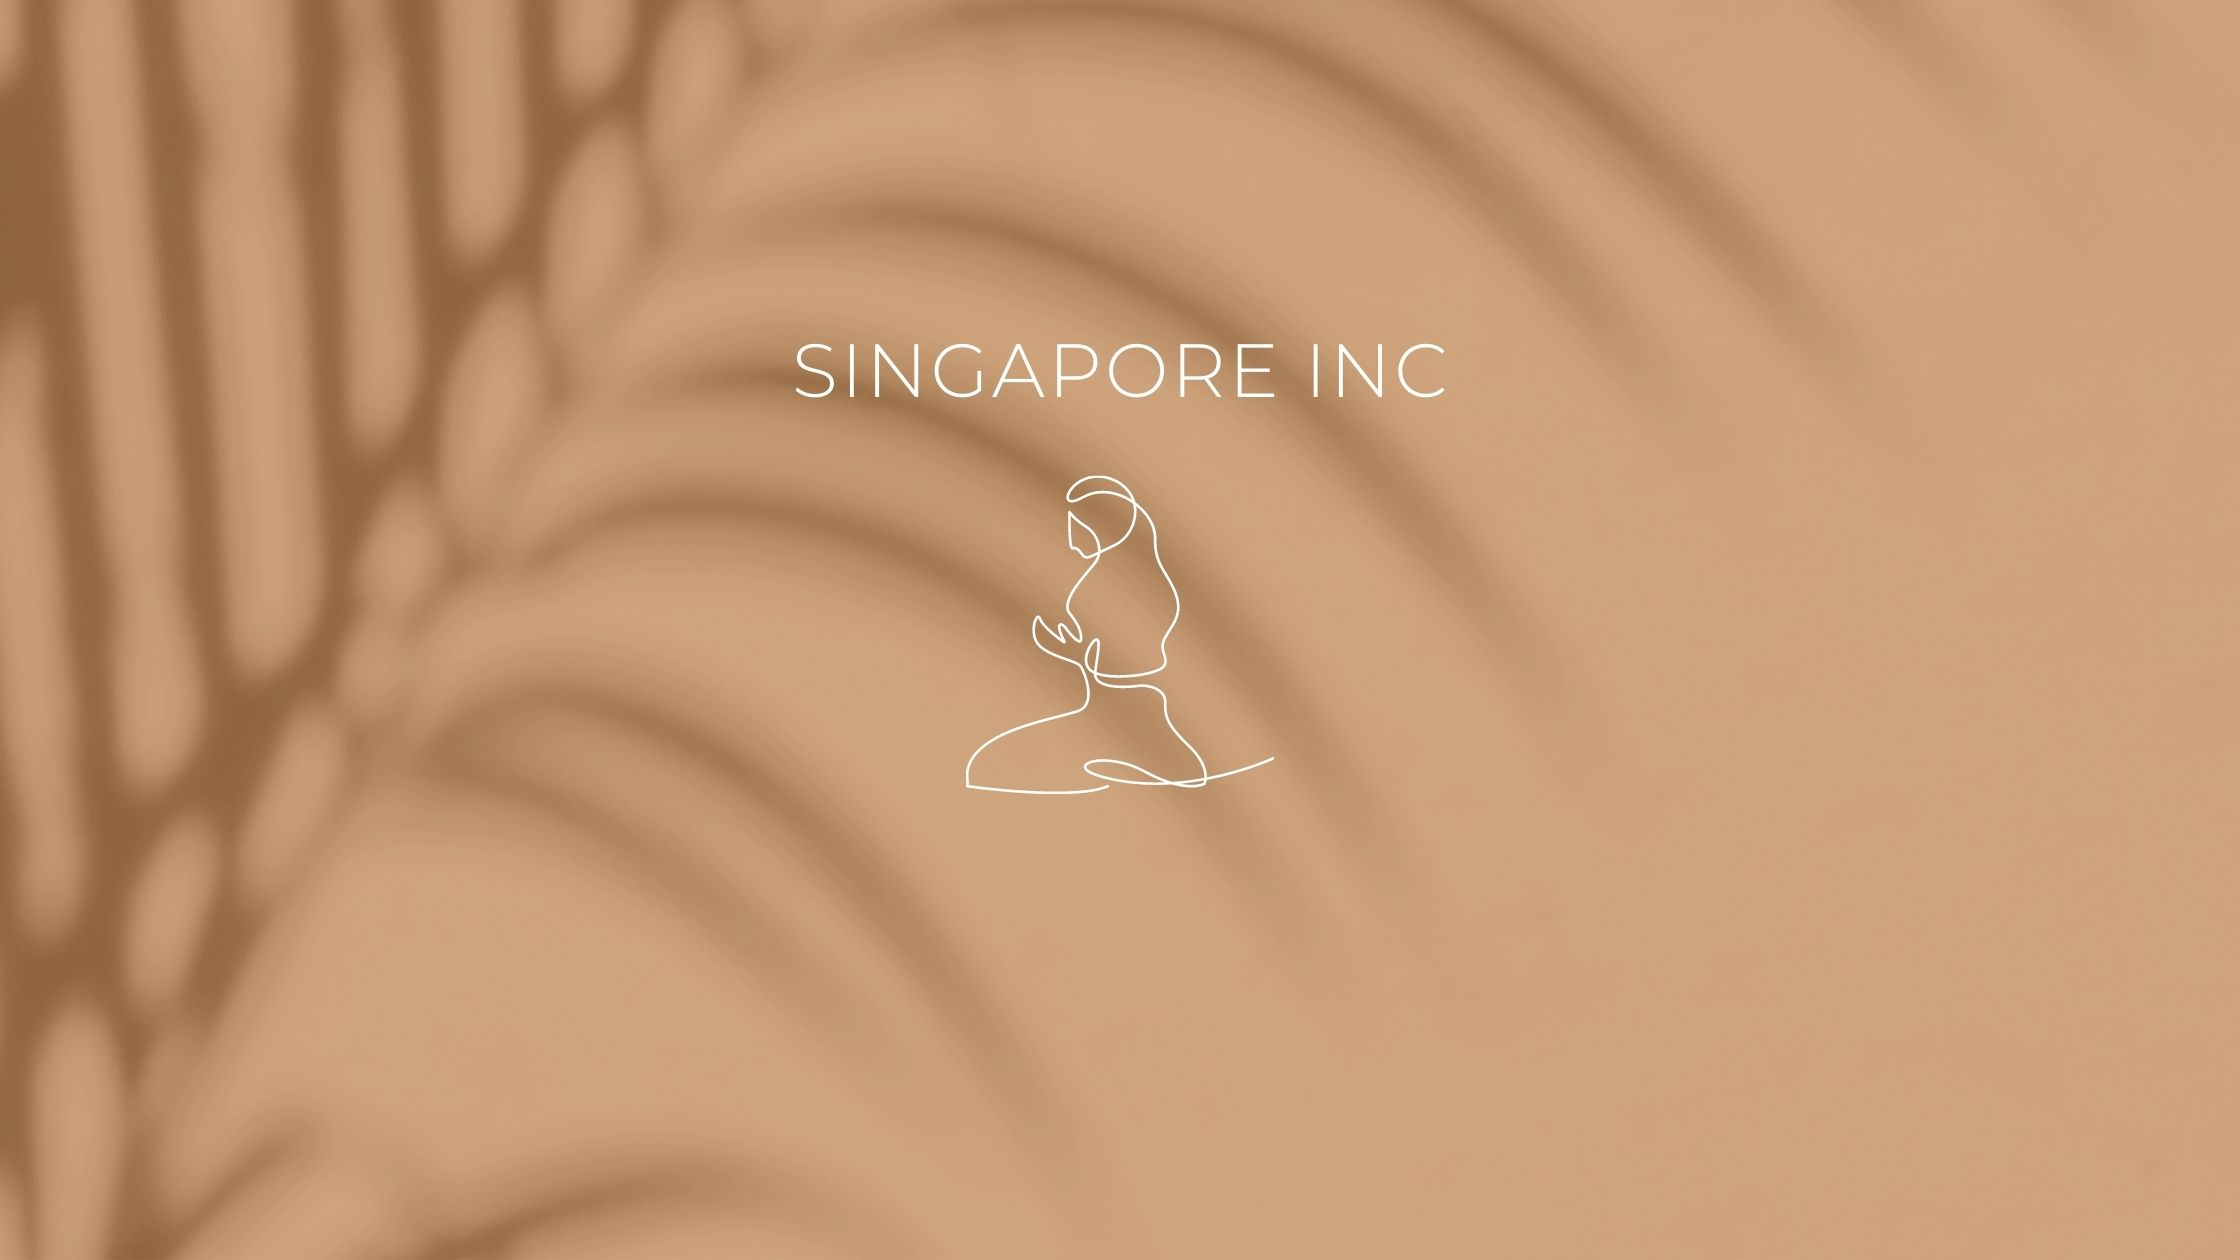 Singapore Inc